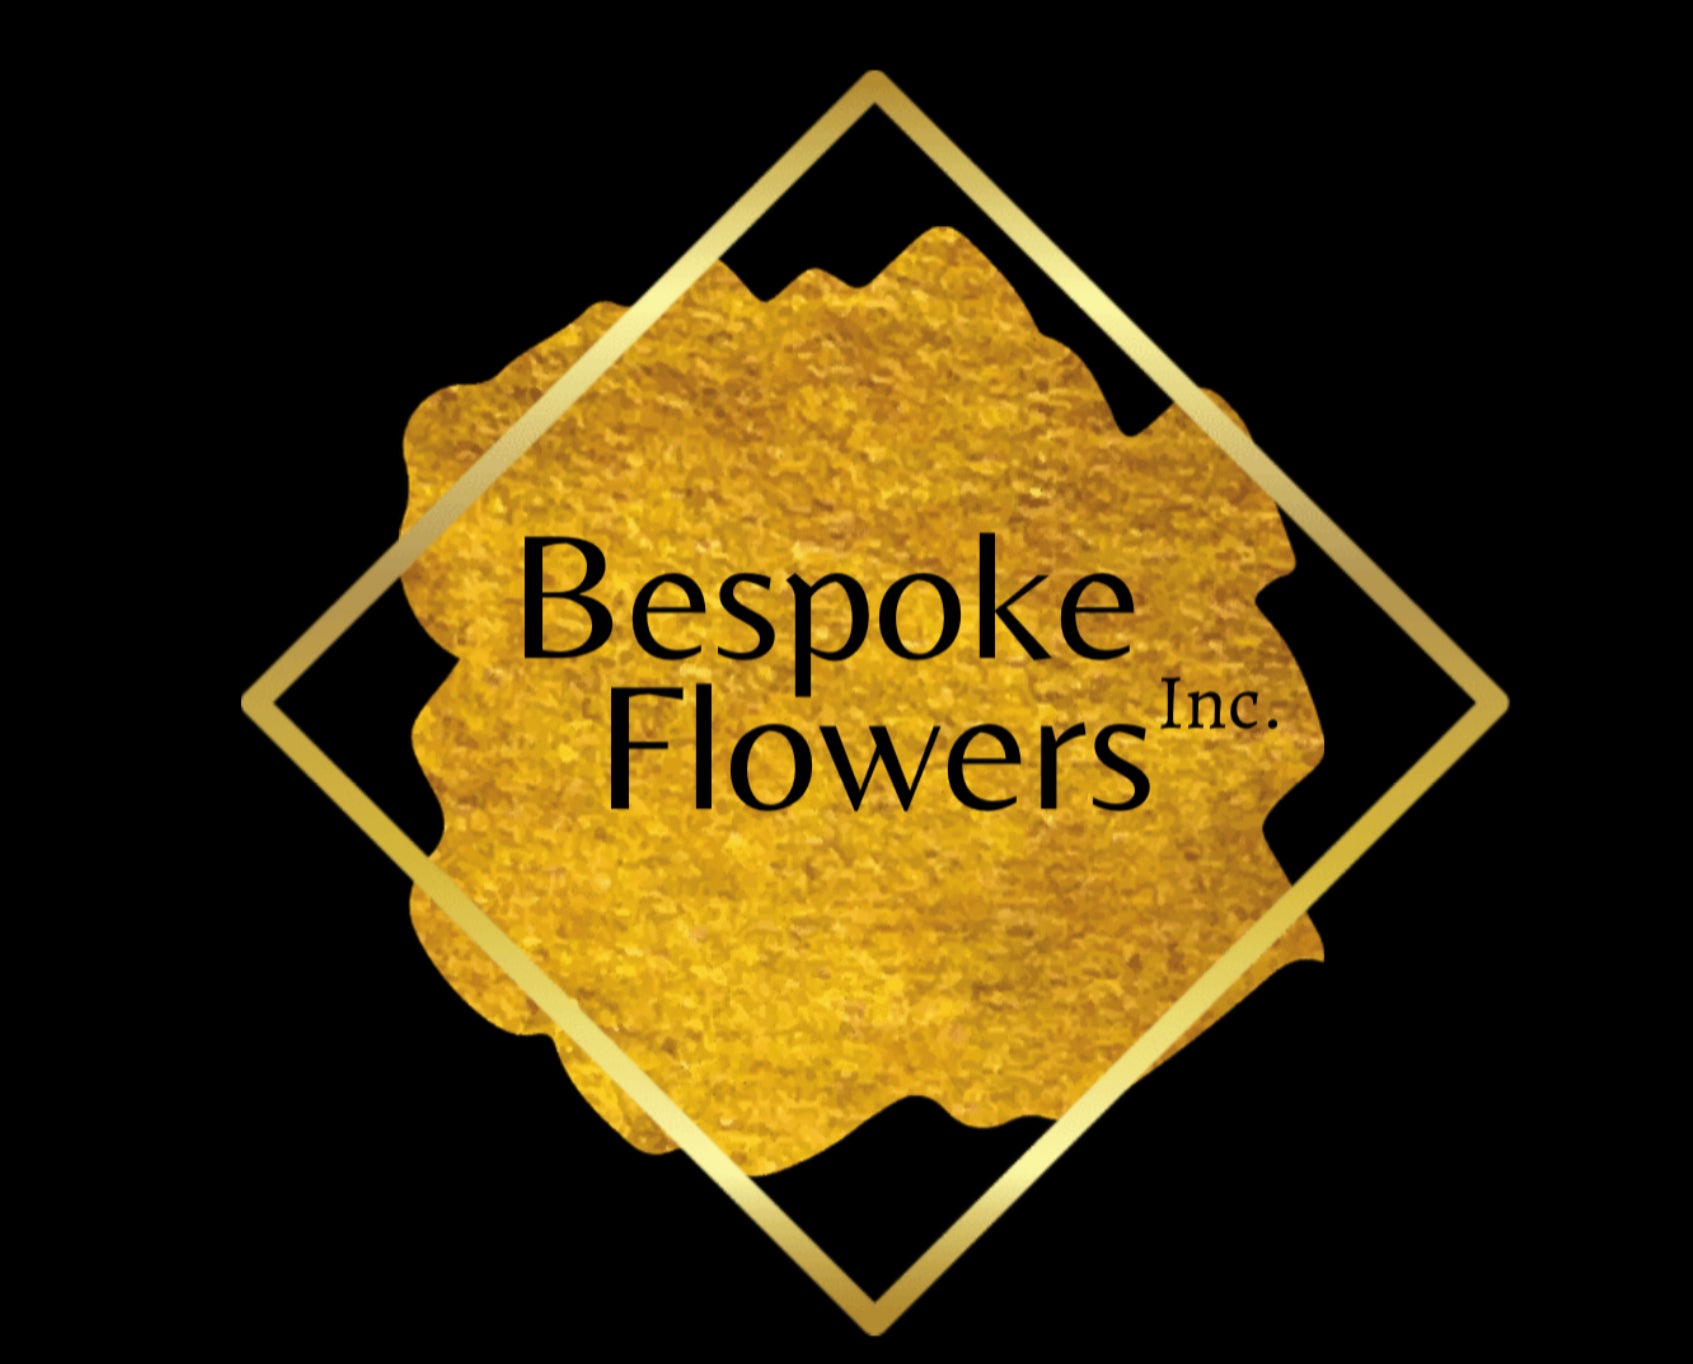 Bespoke Flowers Inc